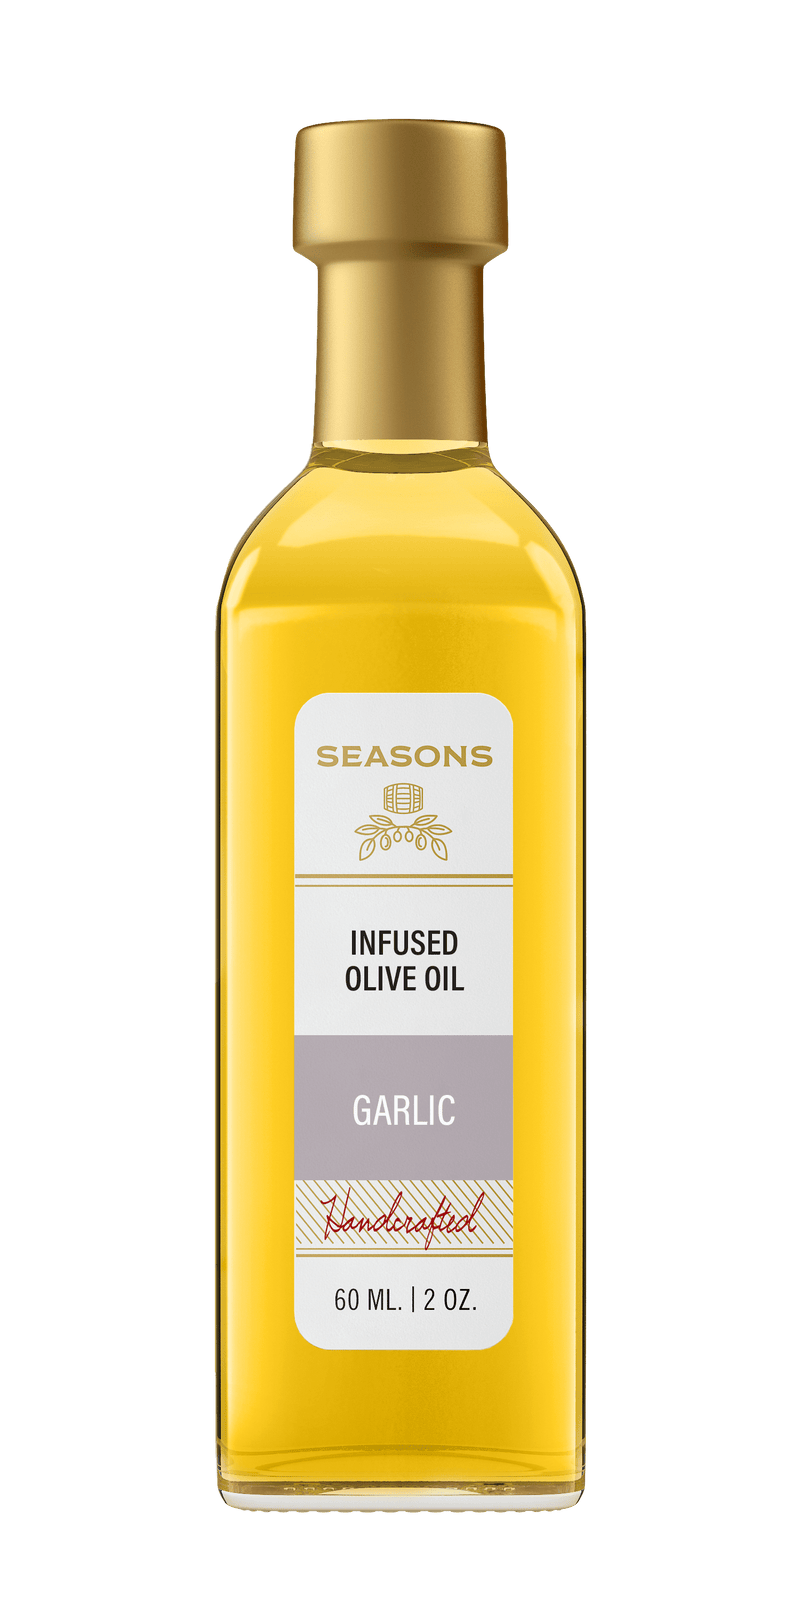 Millpress Imports Infused Olive Oil 60mL Garlic Infused Olive Oil